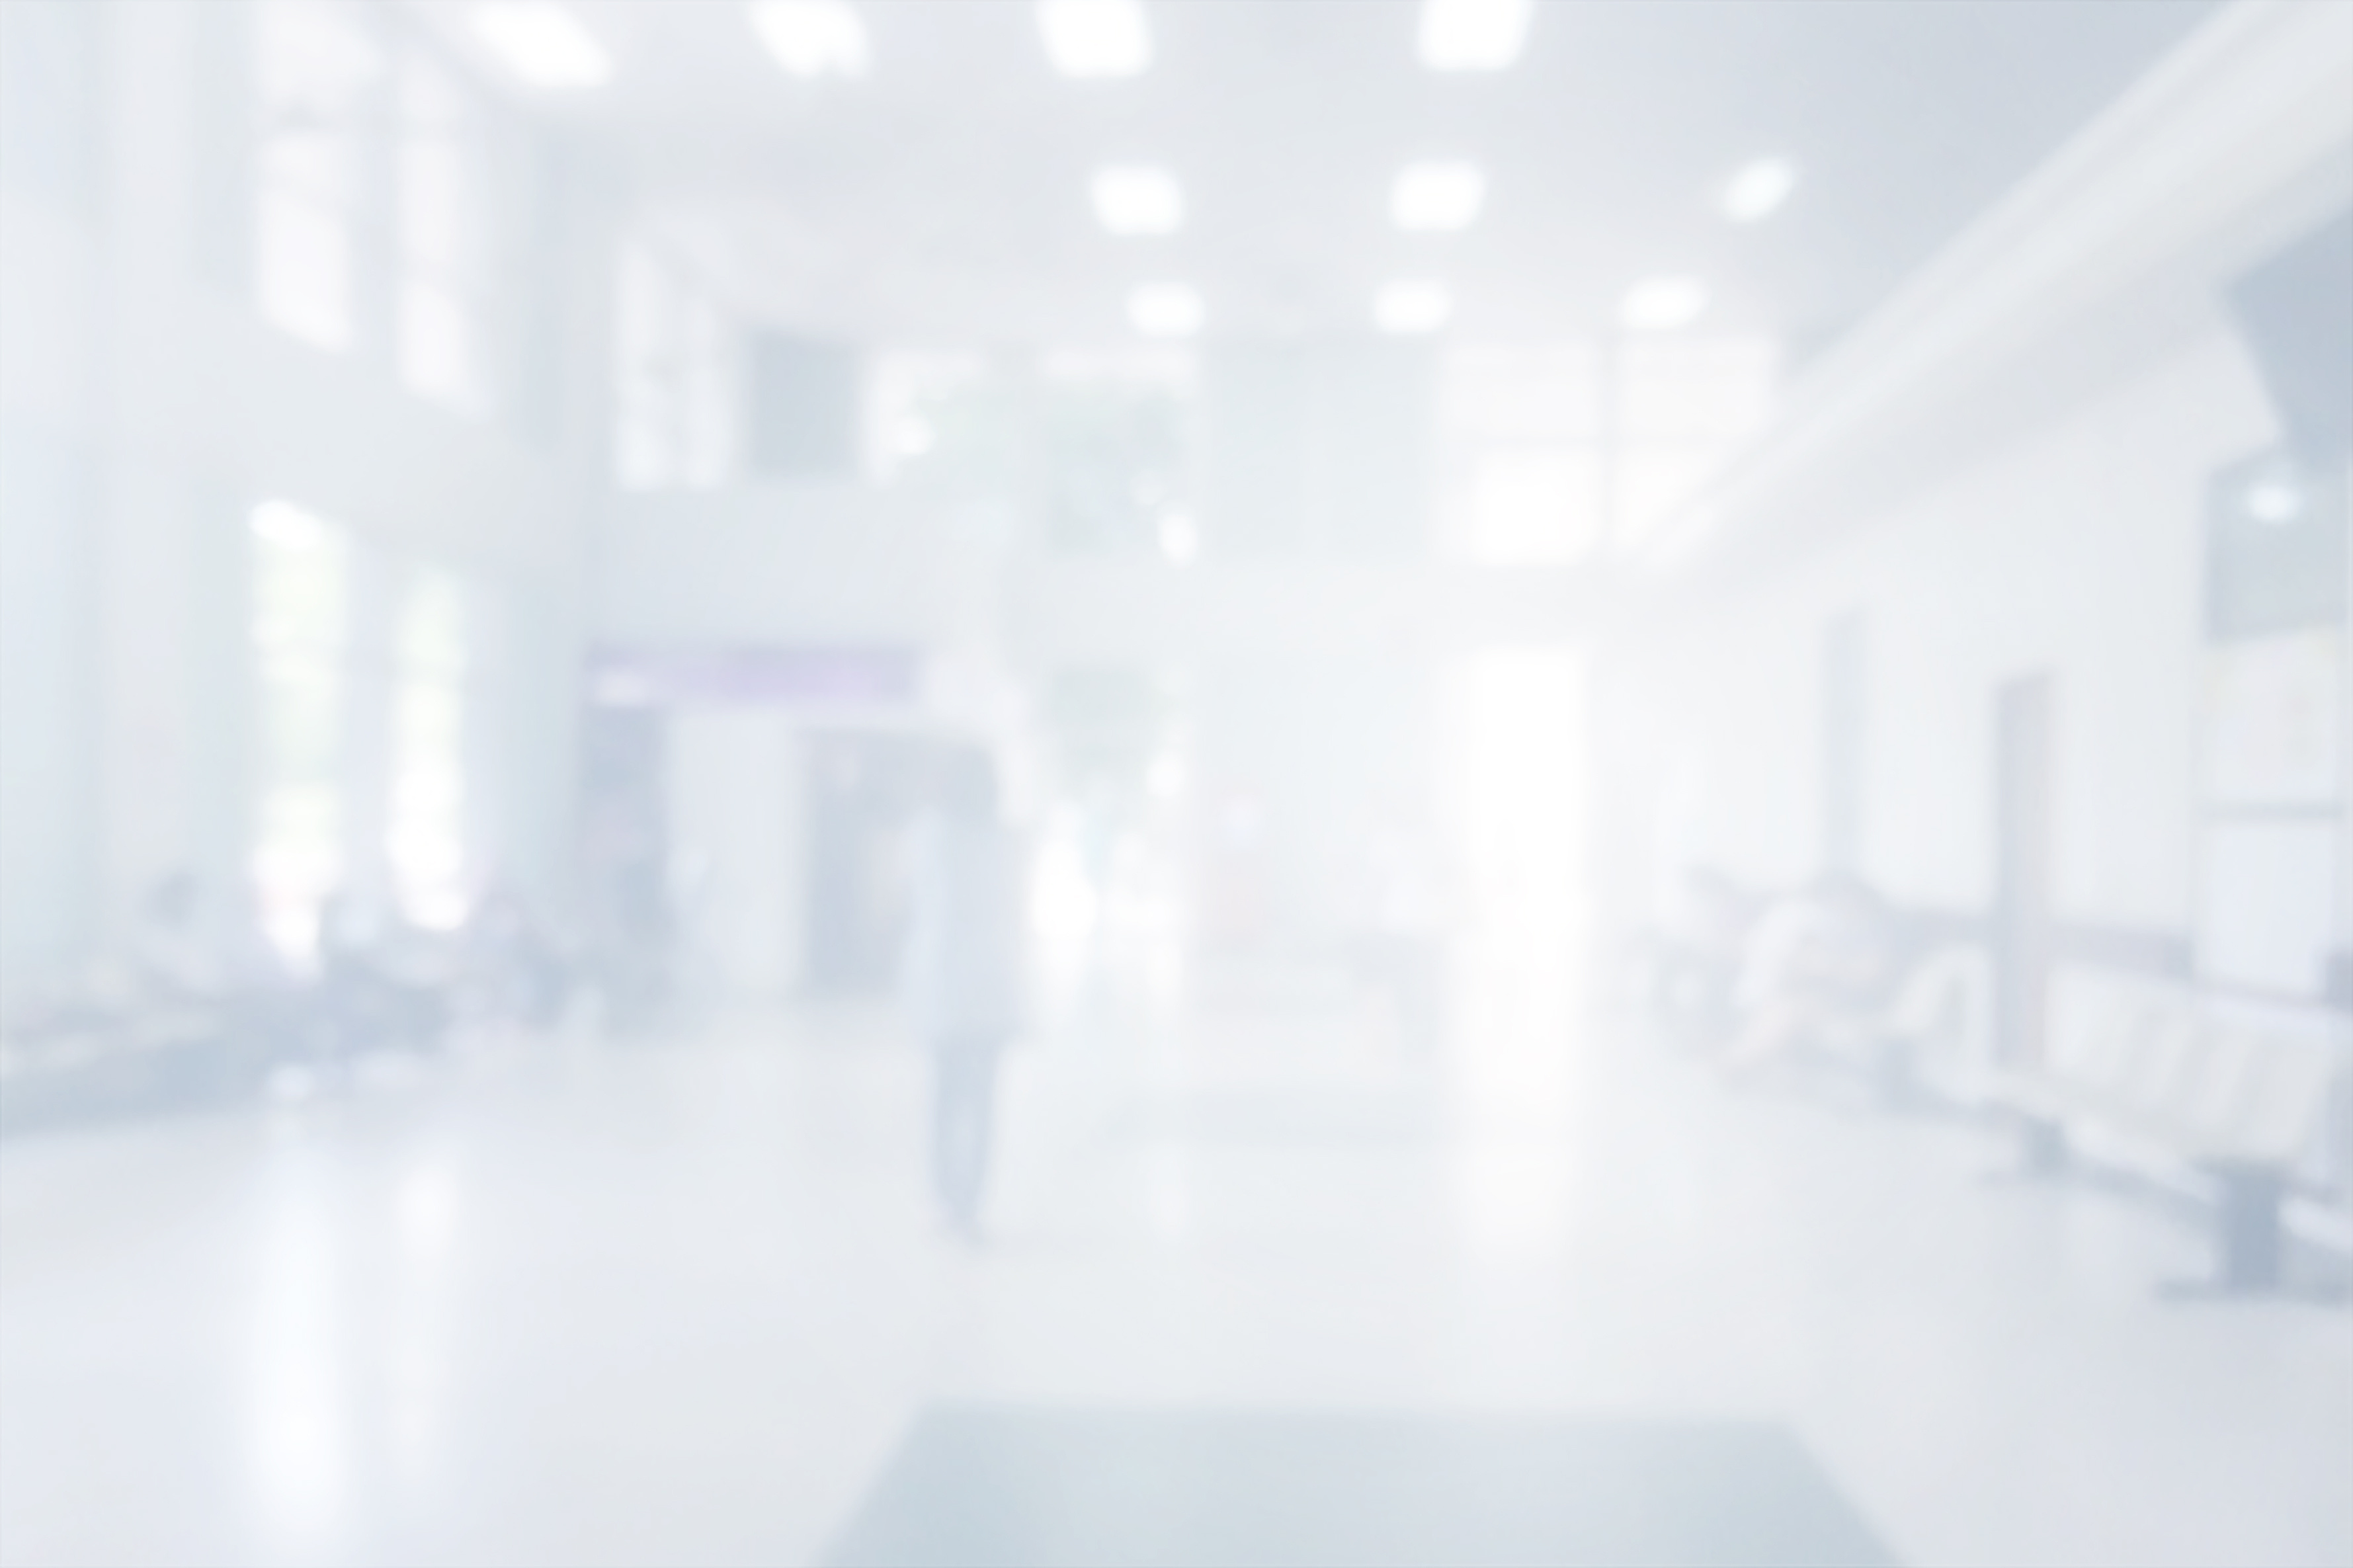 hospital blurry background